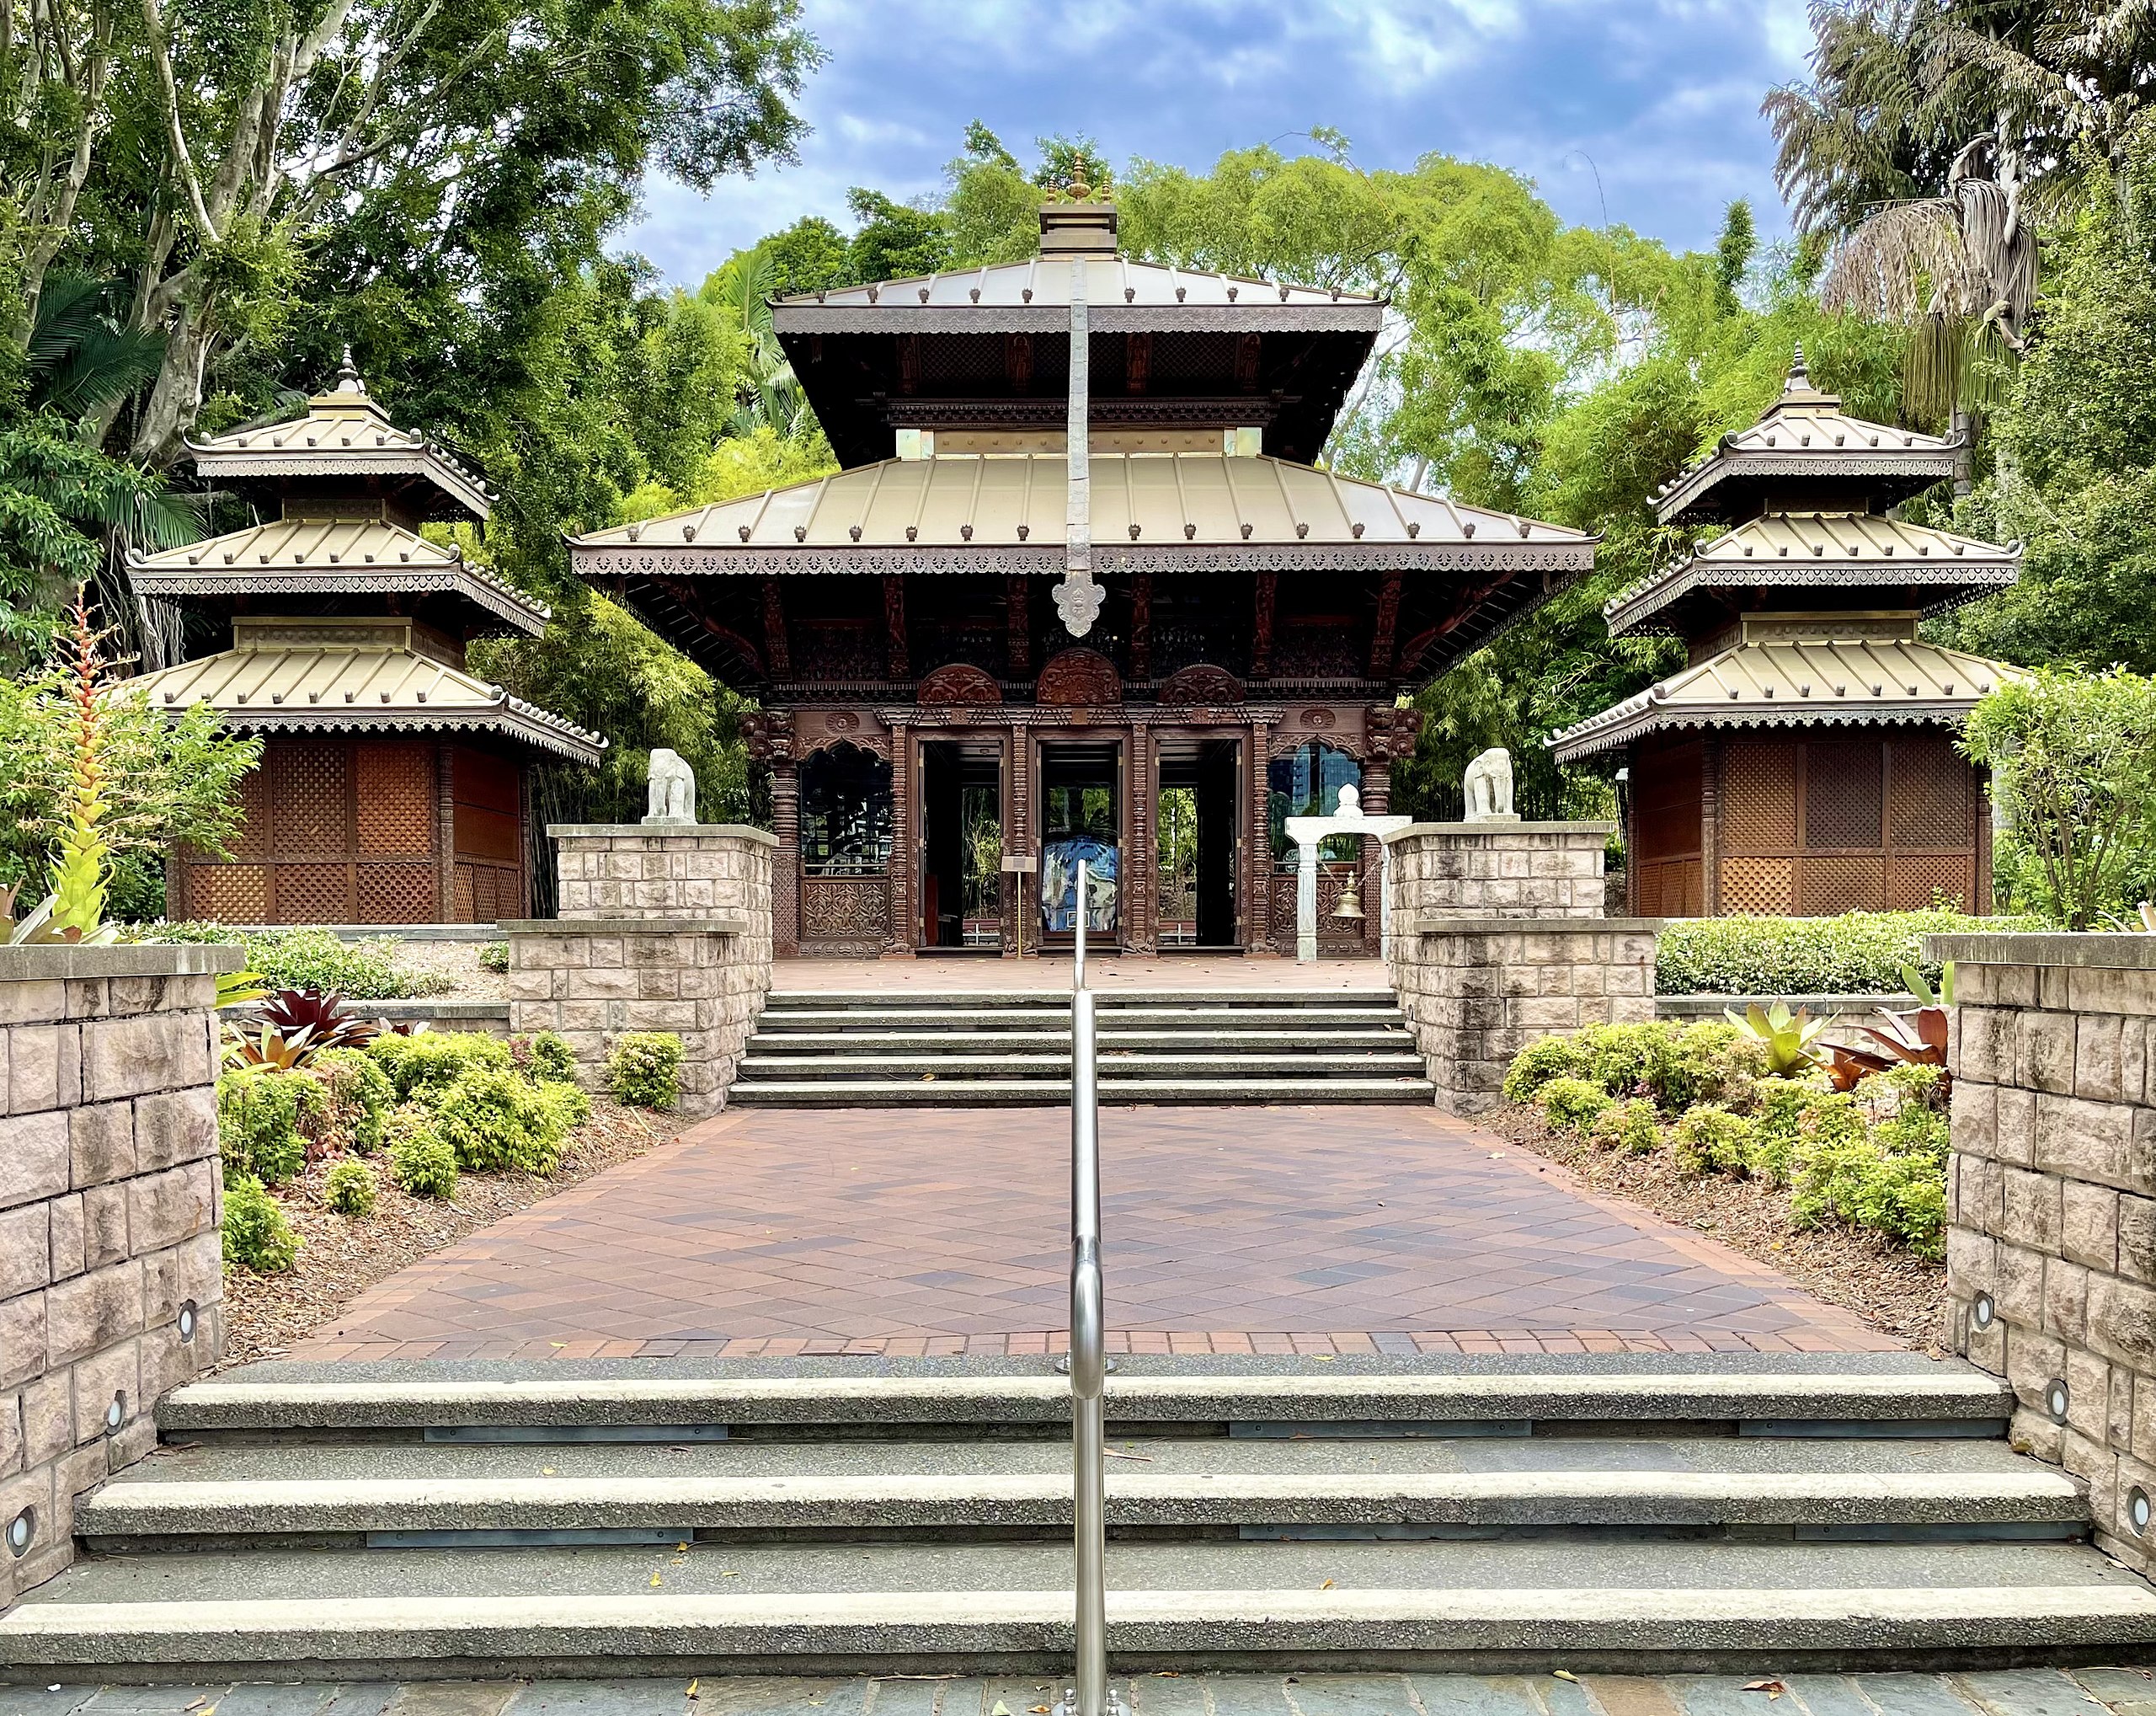 File:Nepal Peace Pagoda, Brisbane, 2020, 02.jpg - Wikimedia Commons